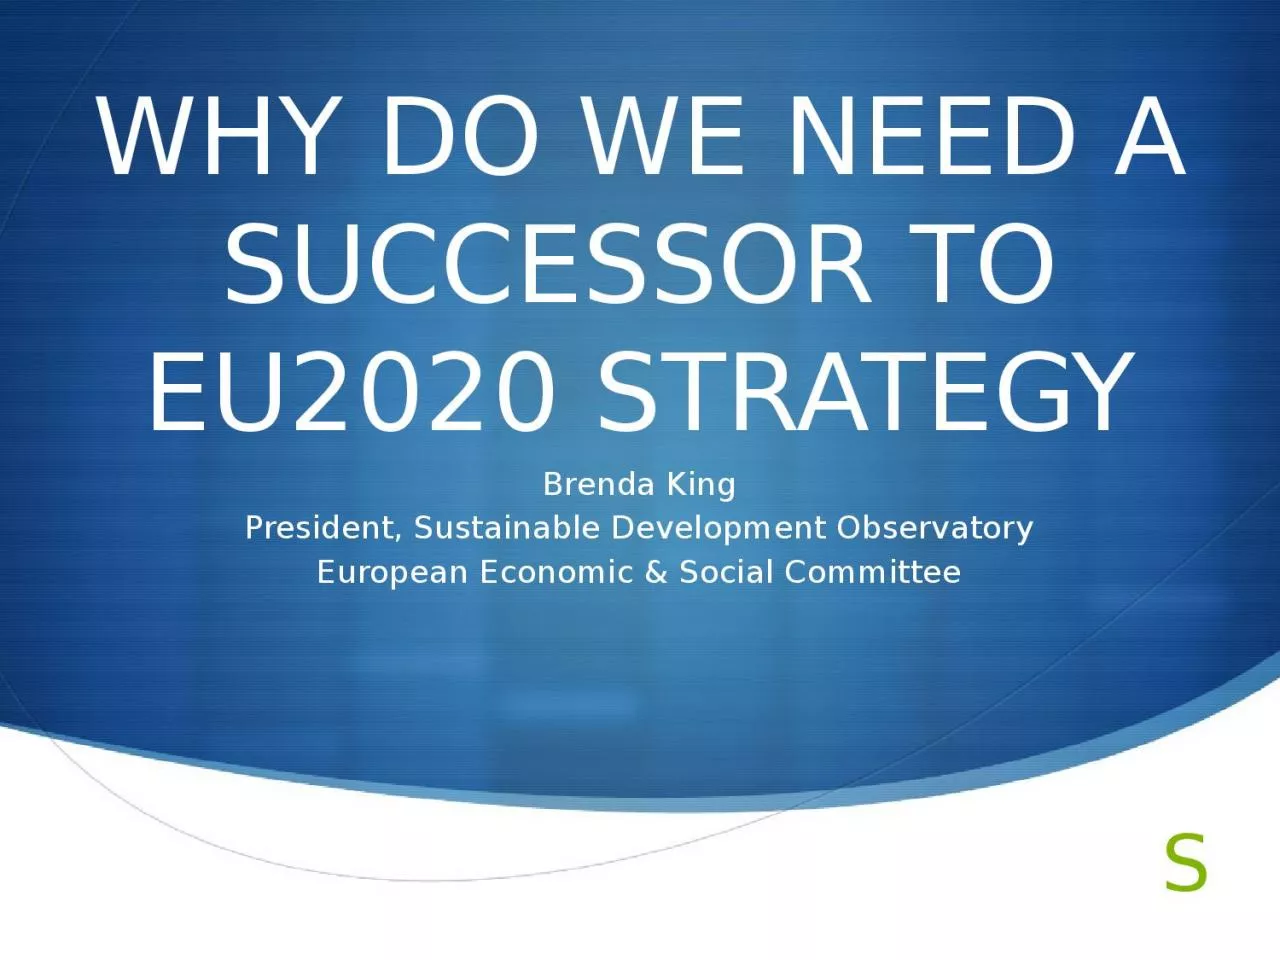 WHY DO WE NEED A SUCCESSOR TO EU2020 STRATEGY